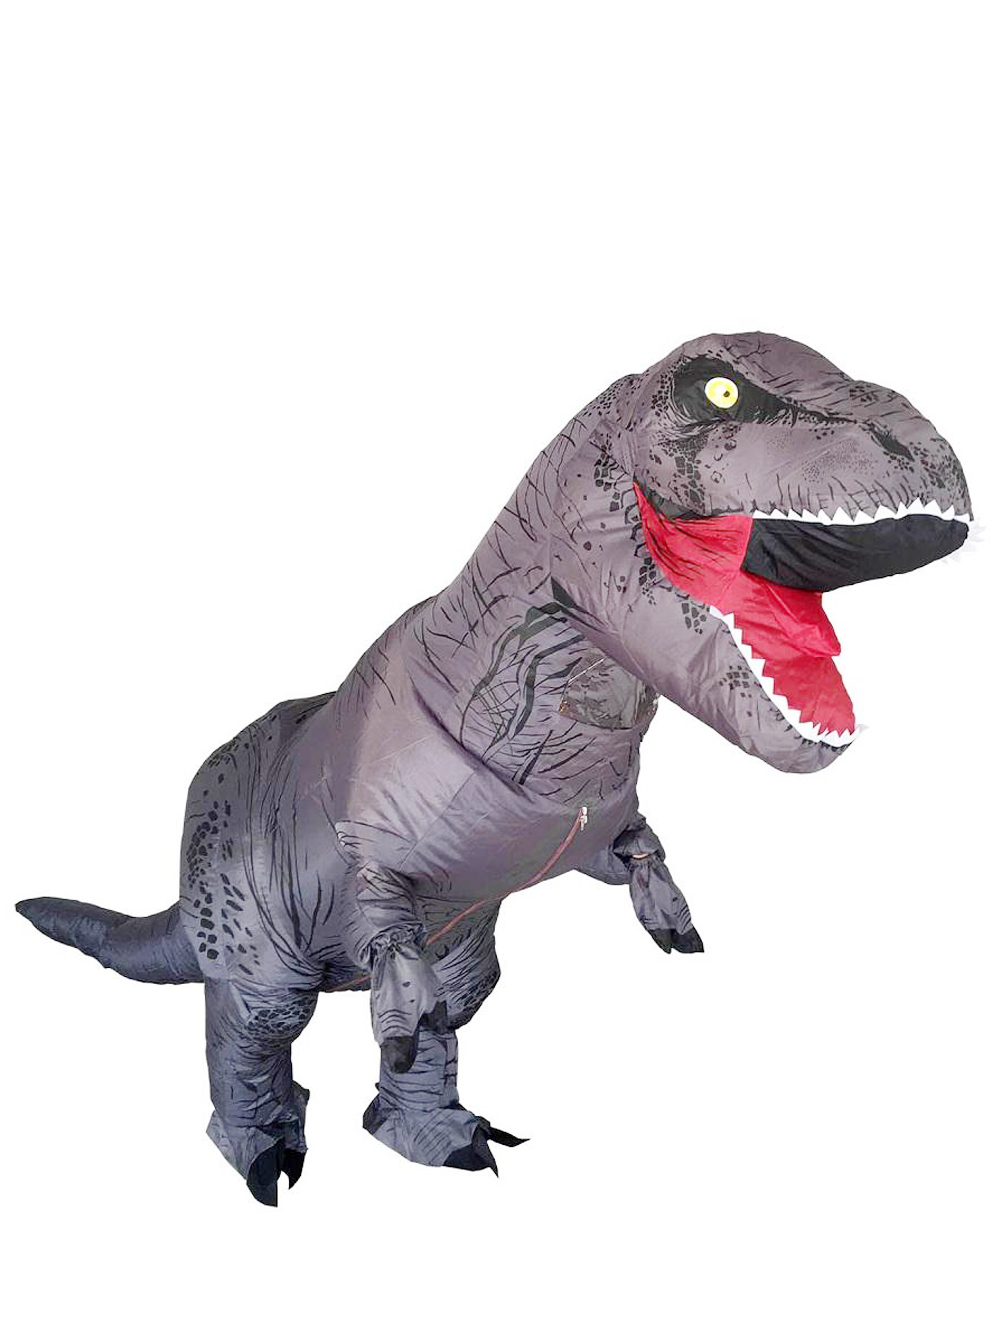 spreker transfusie Plantkunde Opblaasbaar T-rex kostuum dino pak grijs Jurassic World™ kopen?  FeestinjeBeest.nl